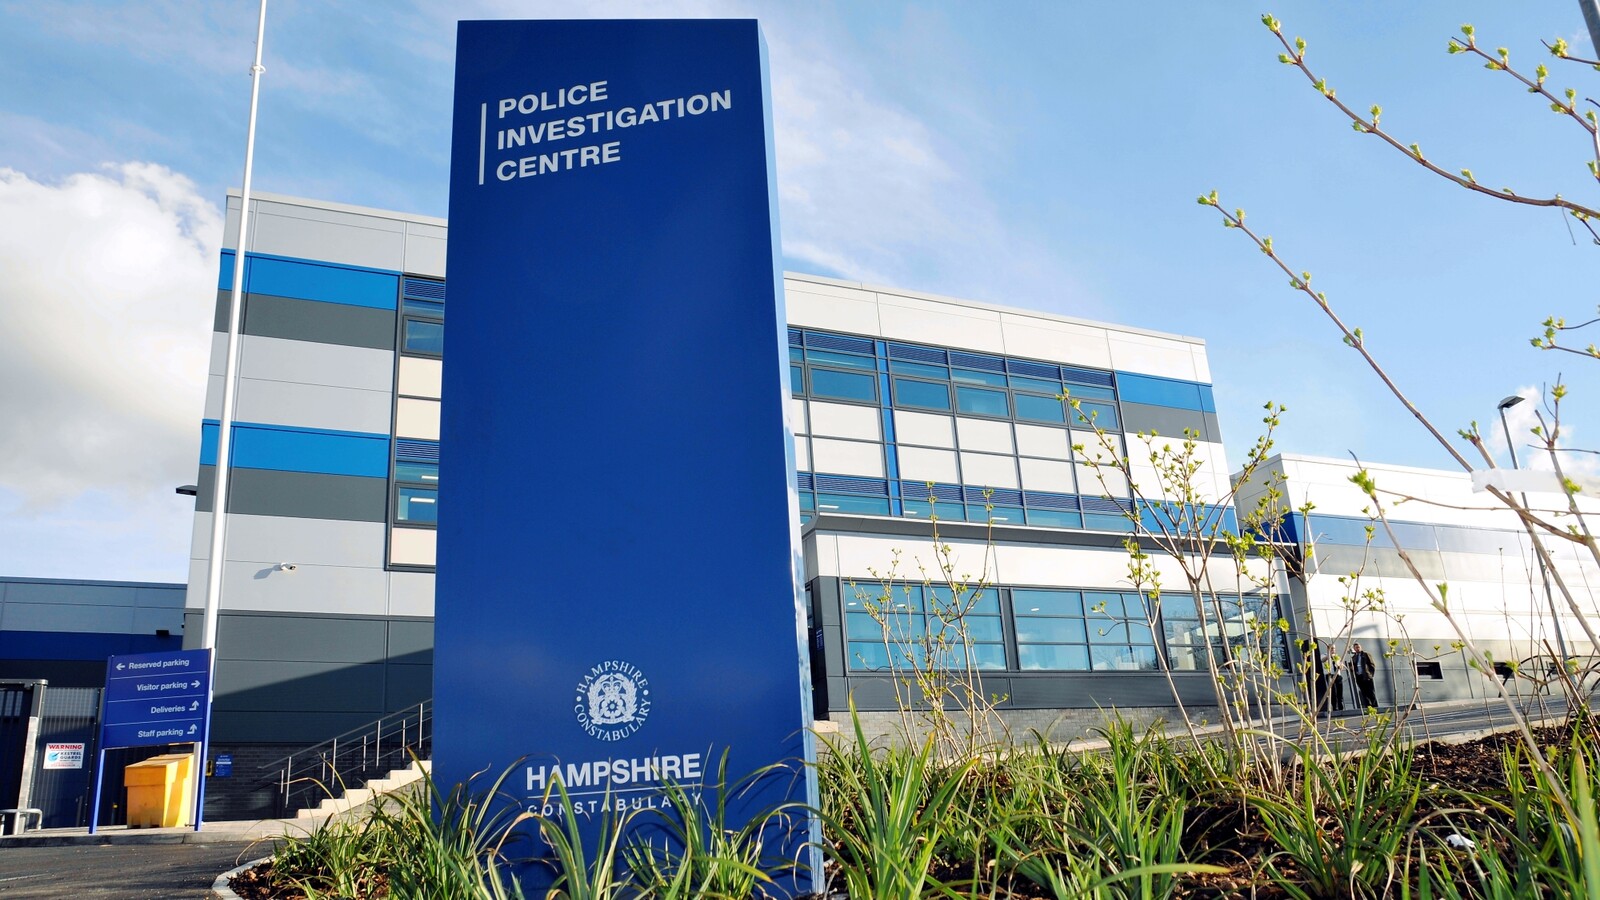 North Hampshire Police Investigation Centre, Basingstoke